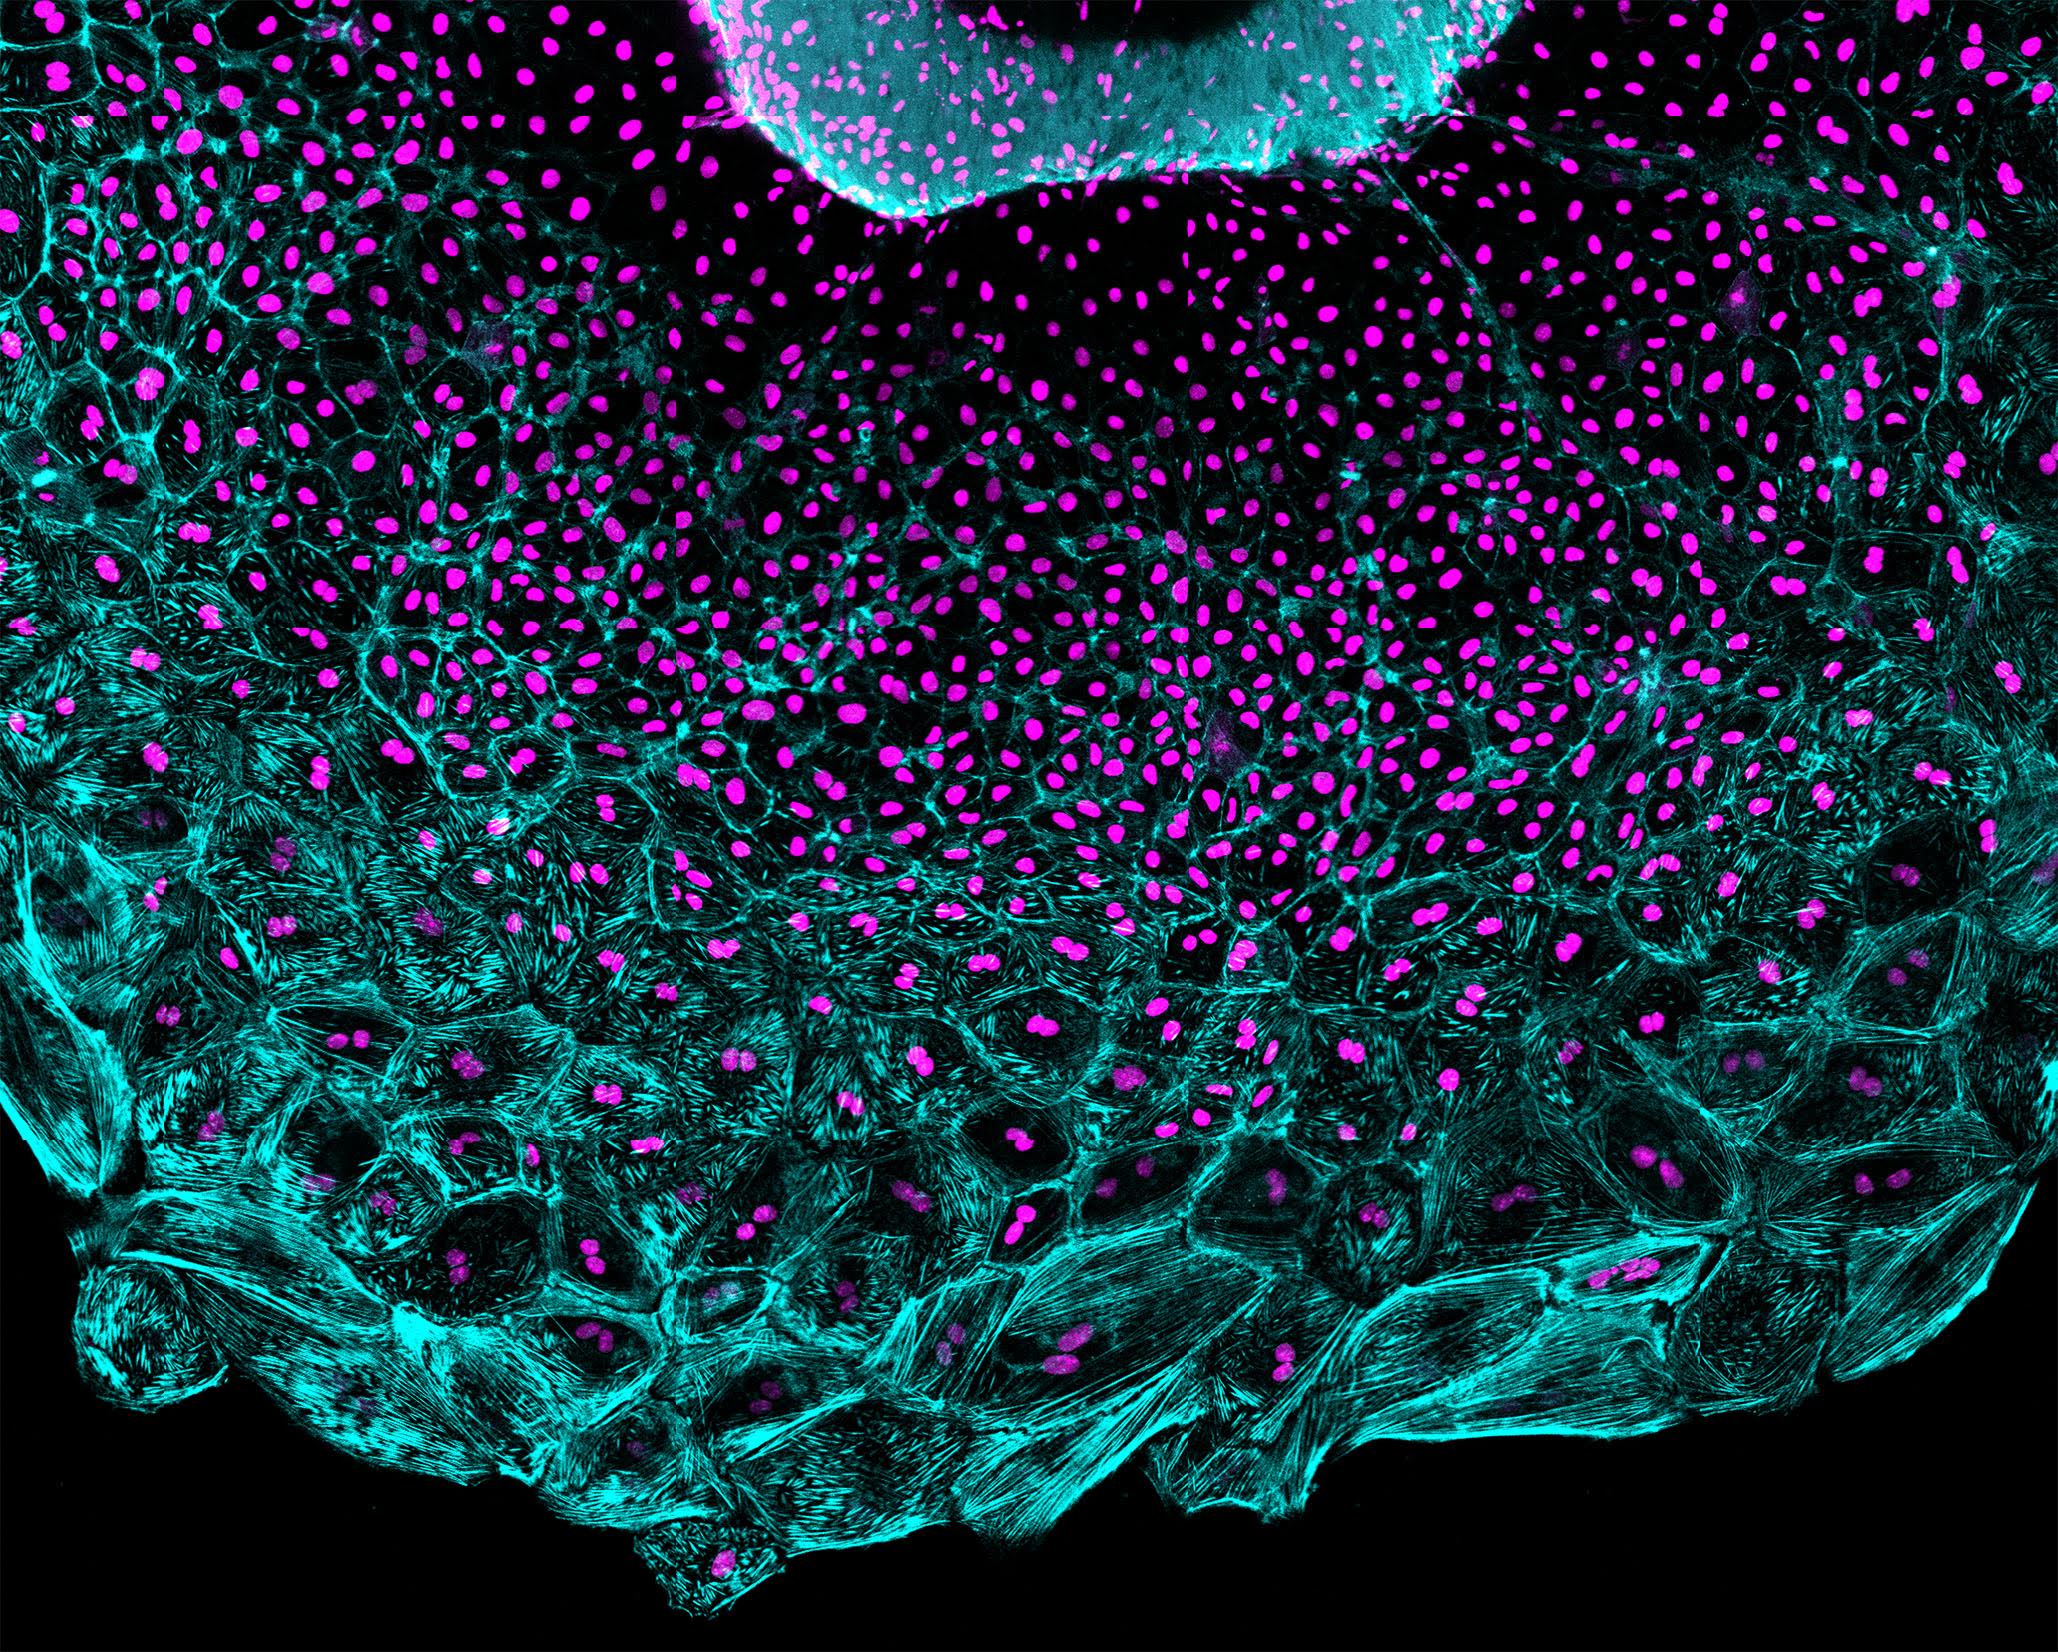 Regrowing cells in a zebrafish heart.